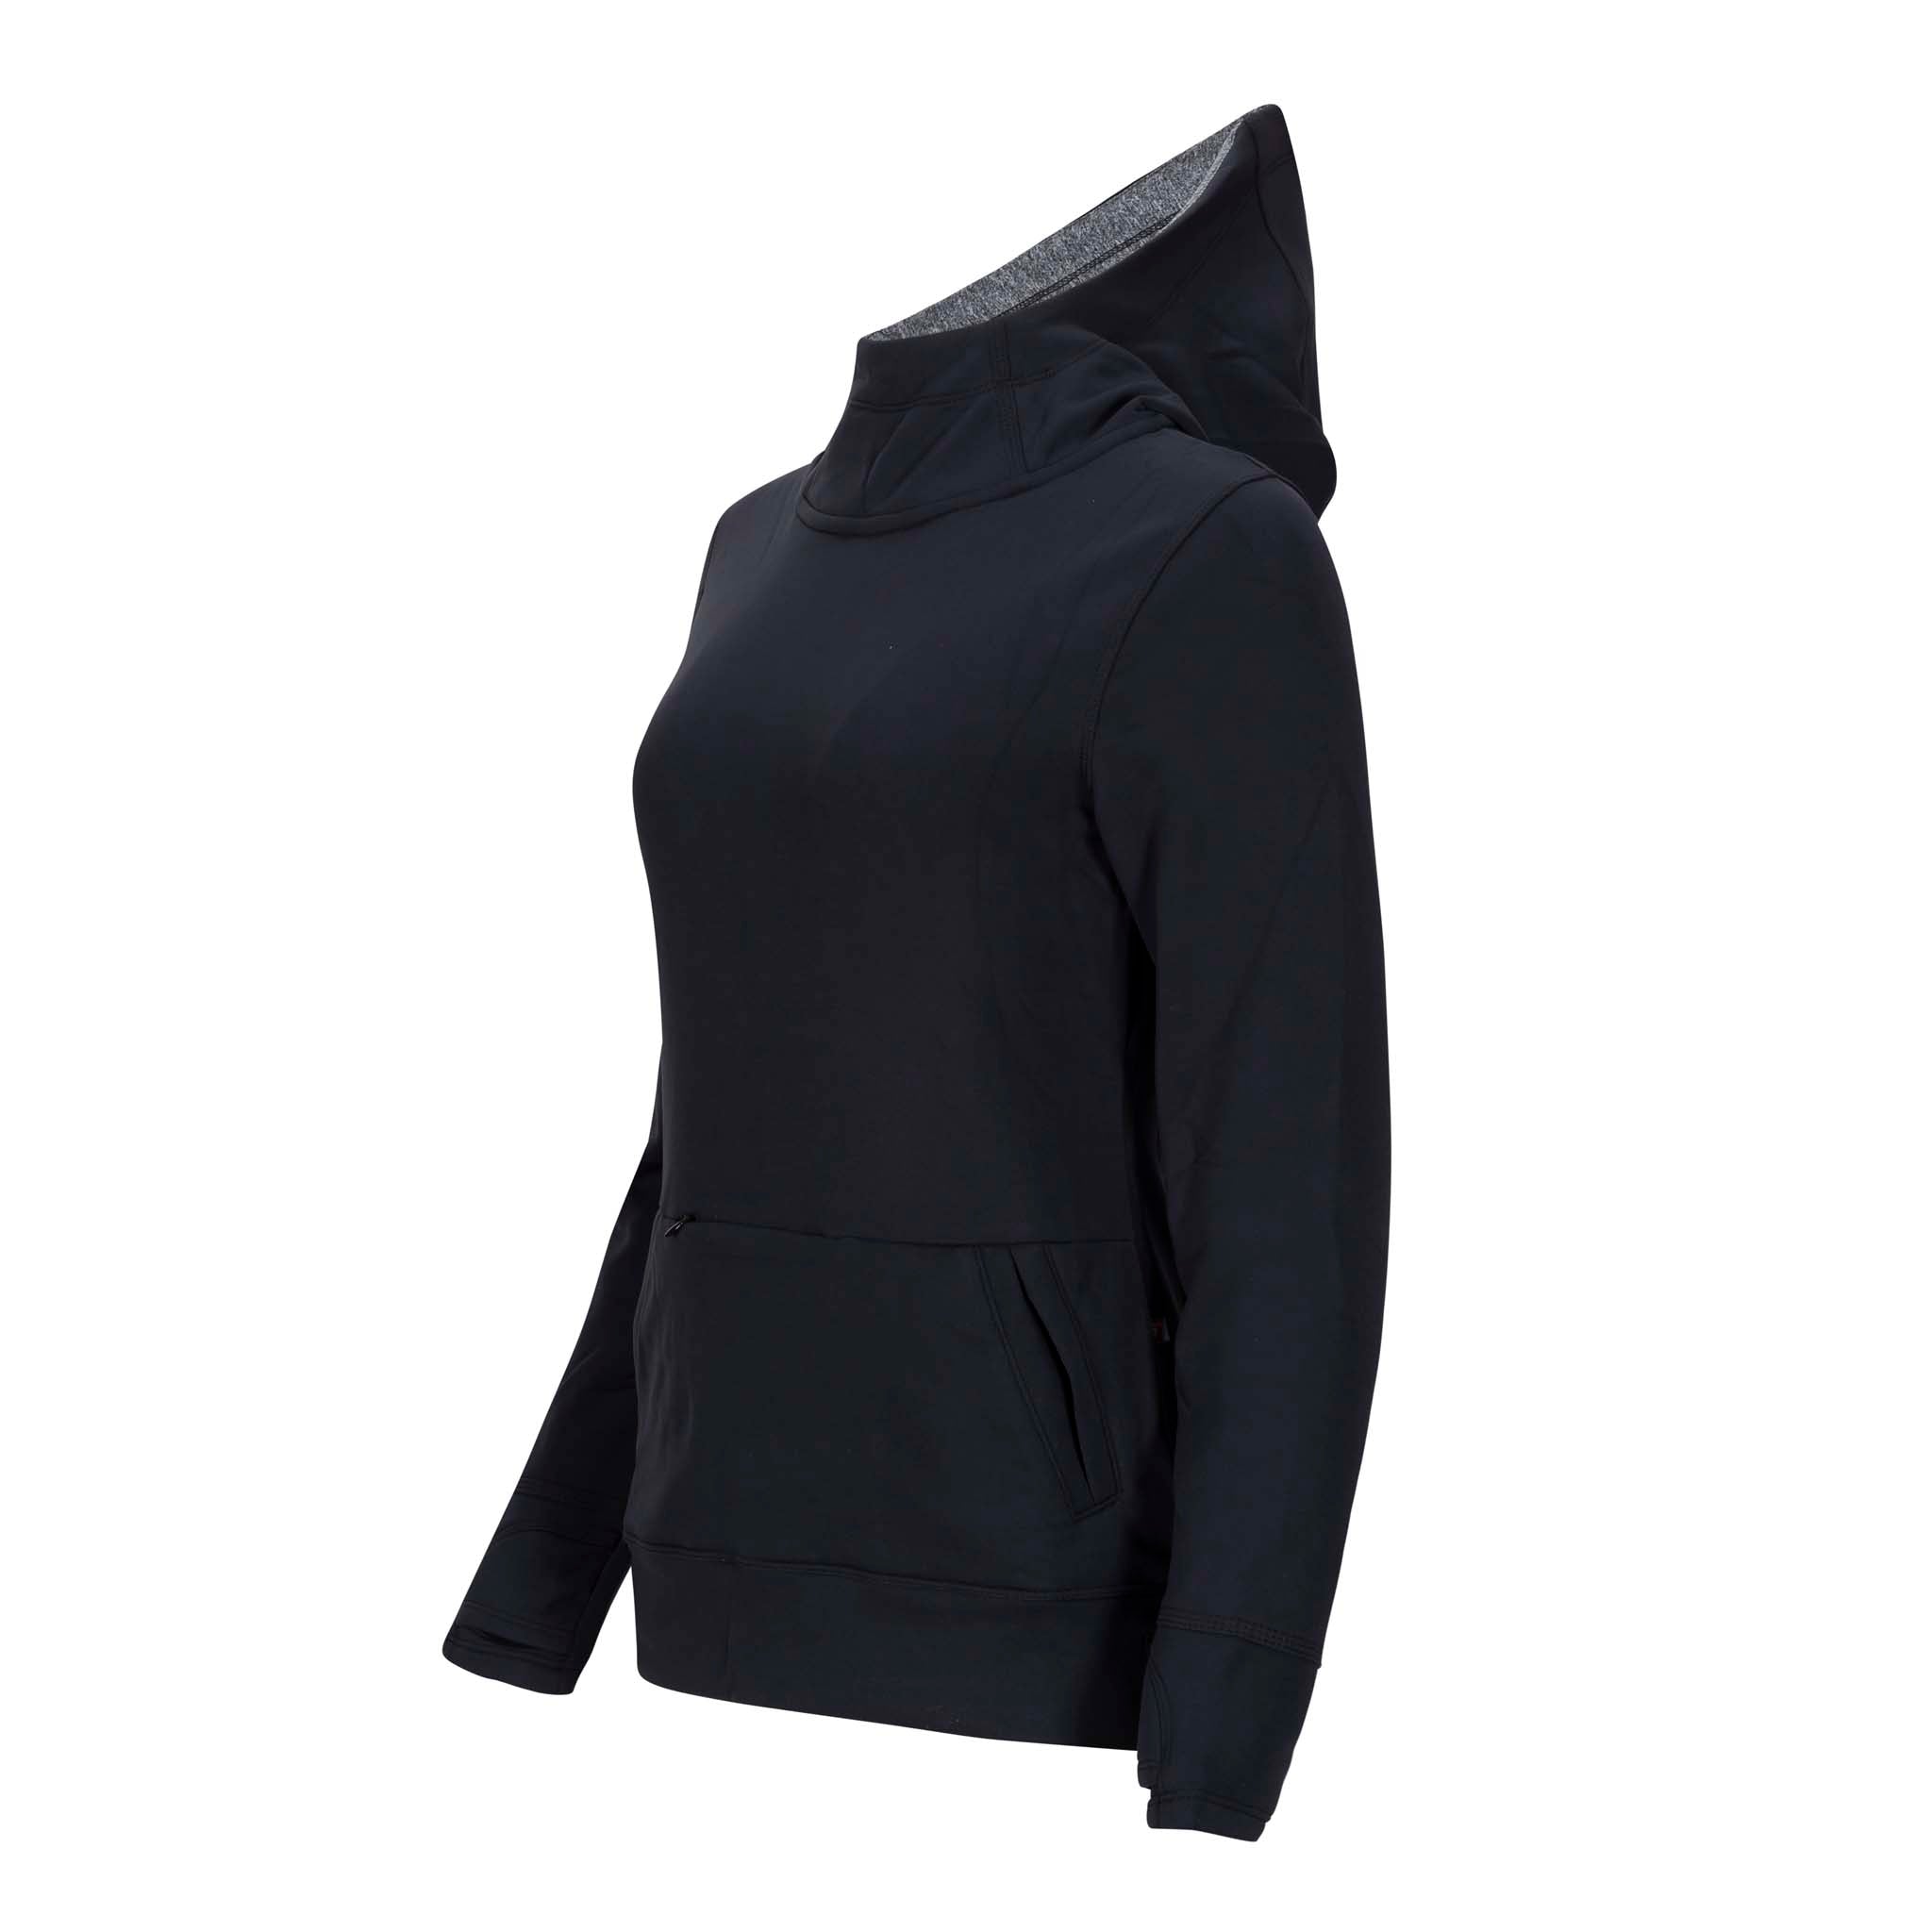 sync-performance-women's-benchmark-hoodie-1.0-black-side